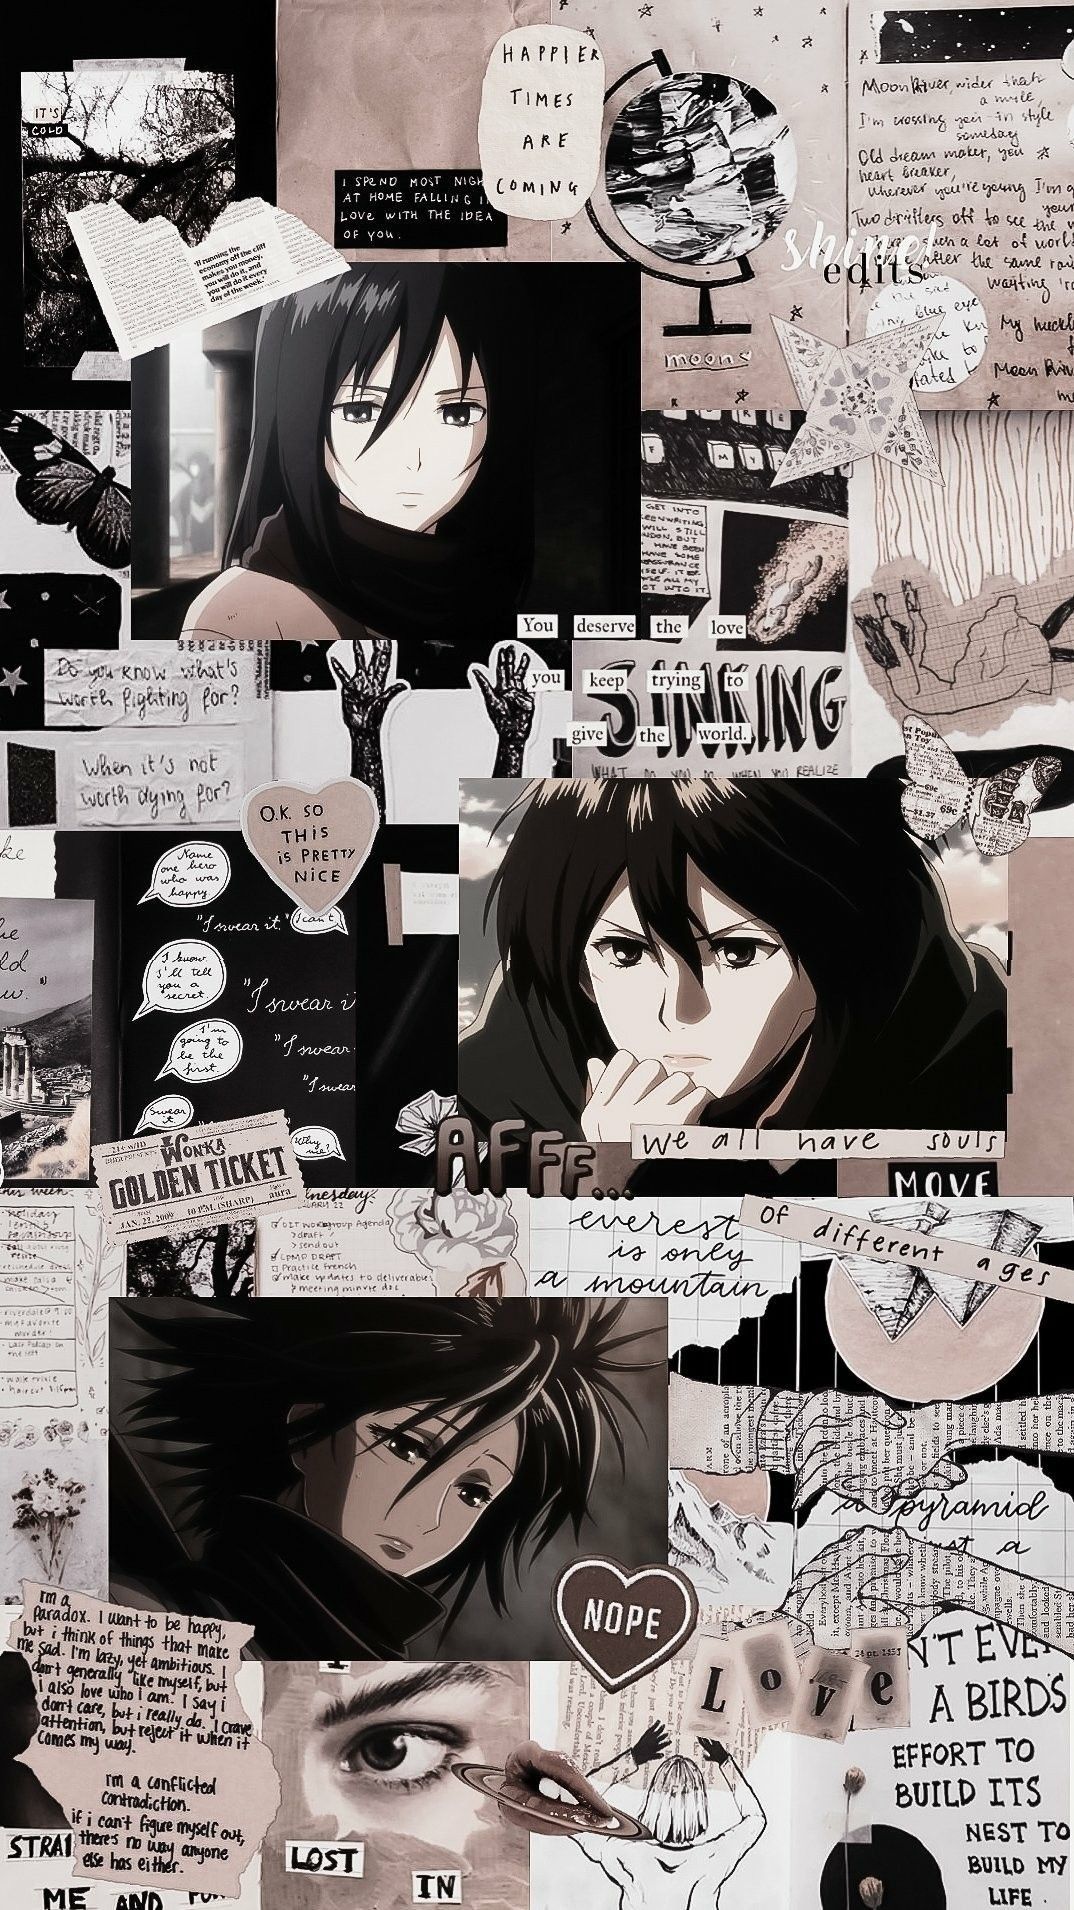 Anime And Anime Aesthetics. Anime background wallpaper, Anime wallpaper